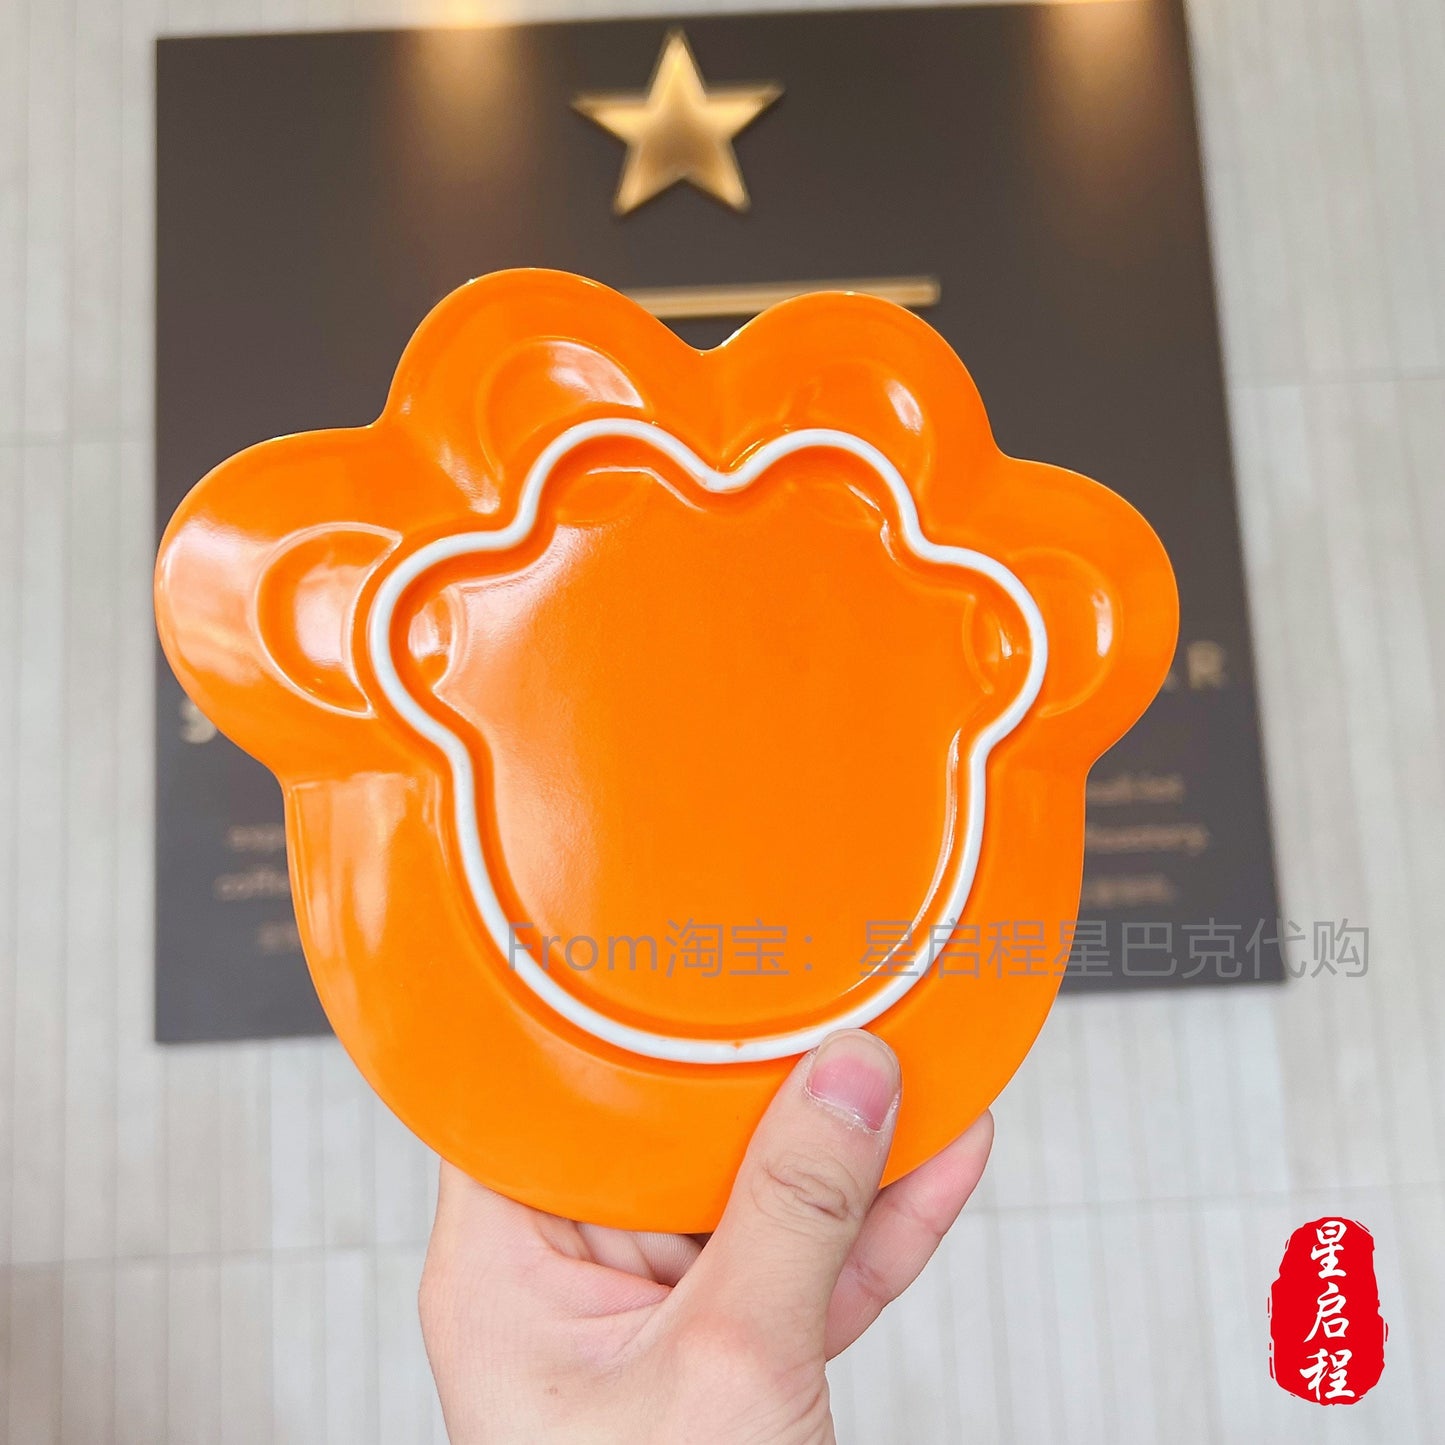 Starbucks China 370ml 2022 new year tiger series orange tiger ceramics mug with ceramics plate set